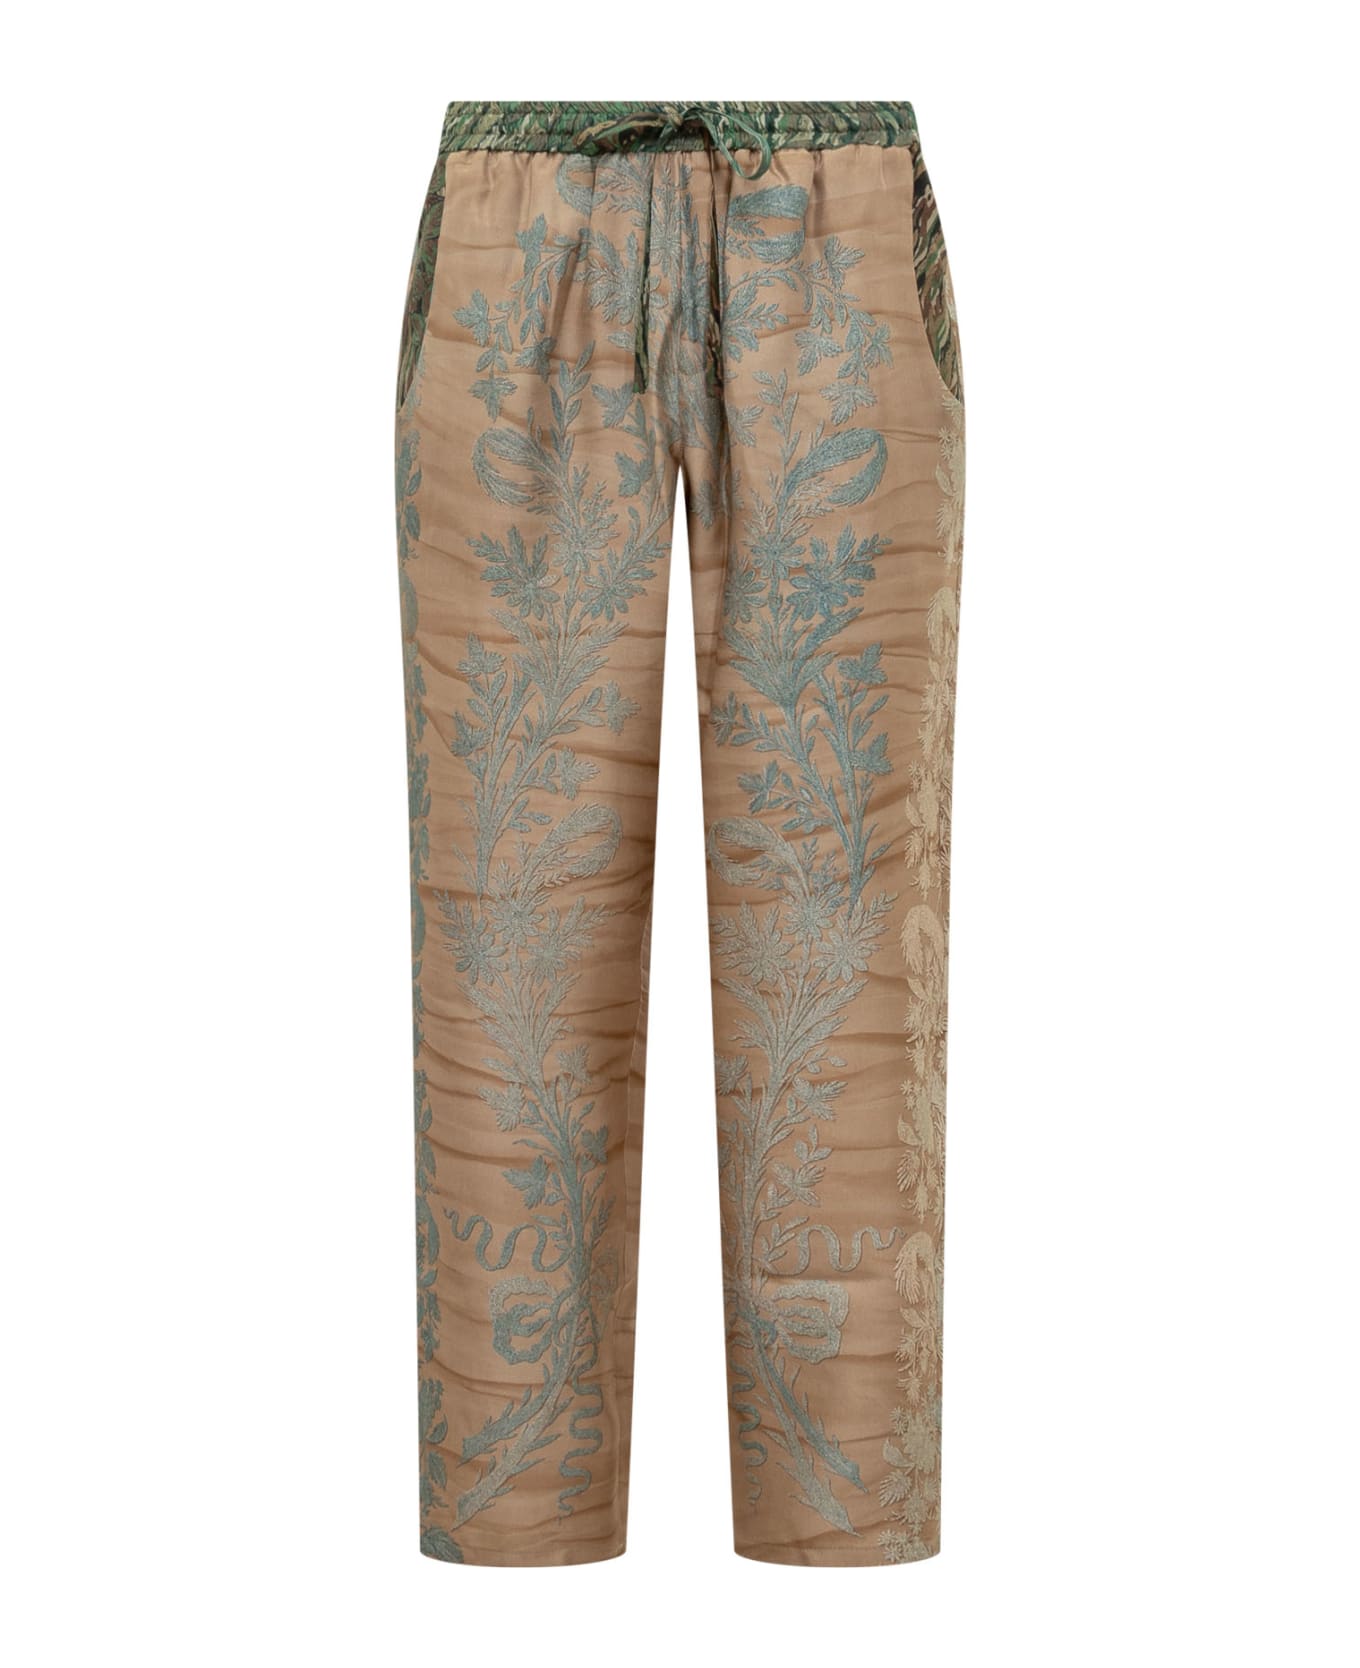 Pierre-Louis Mascia Silk Pants With Floral Print - CIPRIA AZZURRO ボトムス